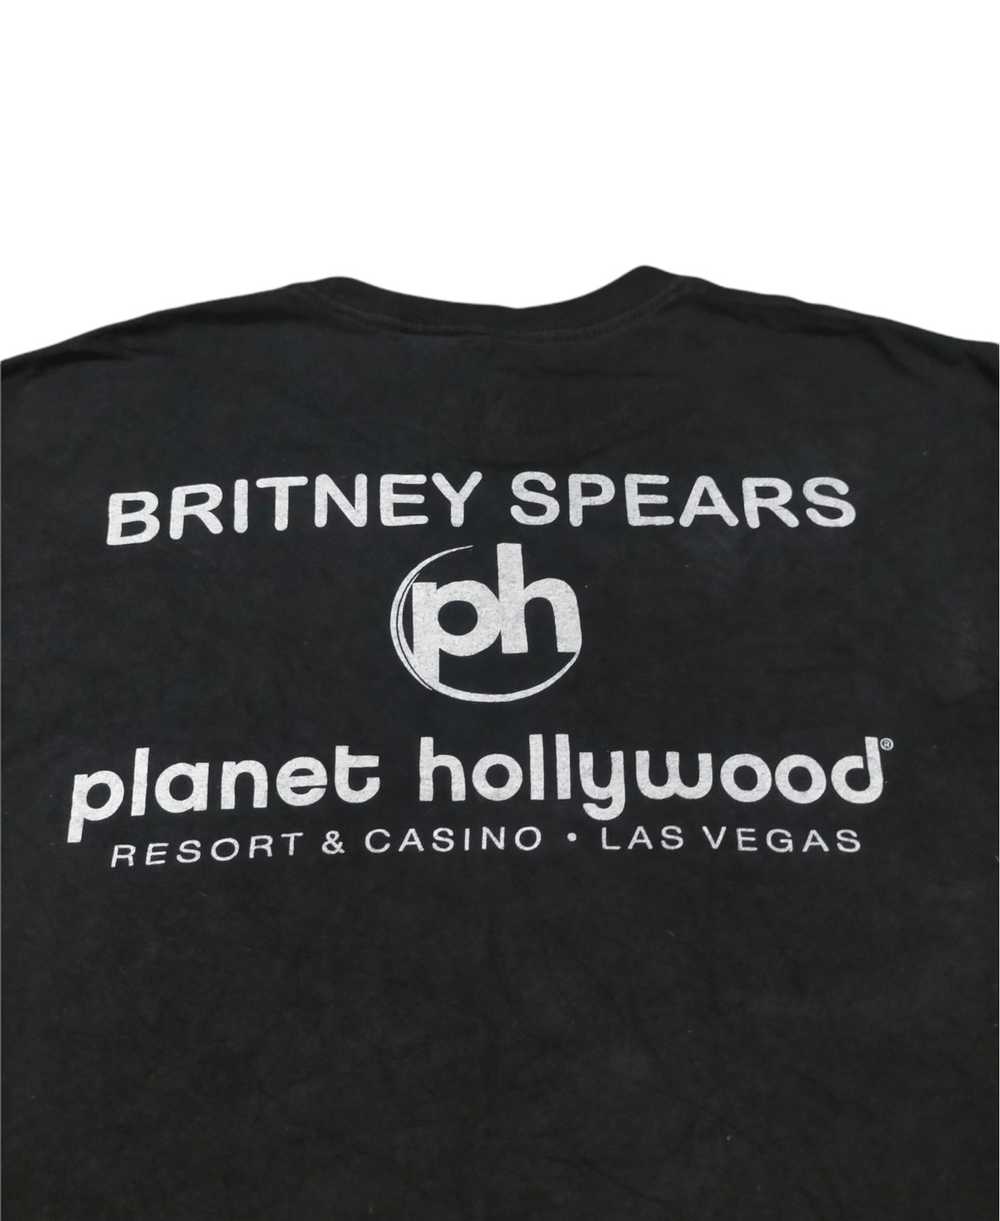 Band Tees × Vintage Britney spears Band tees tee - image 4